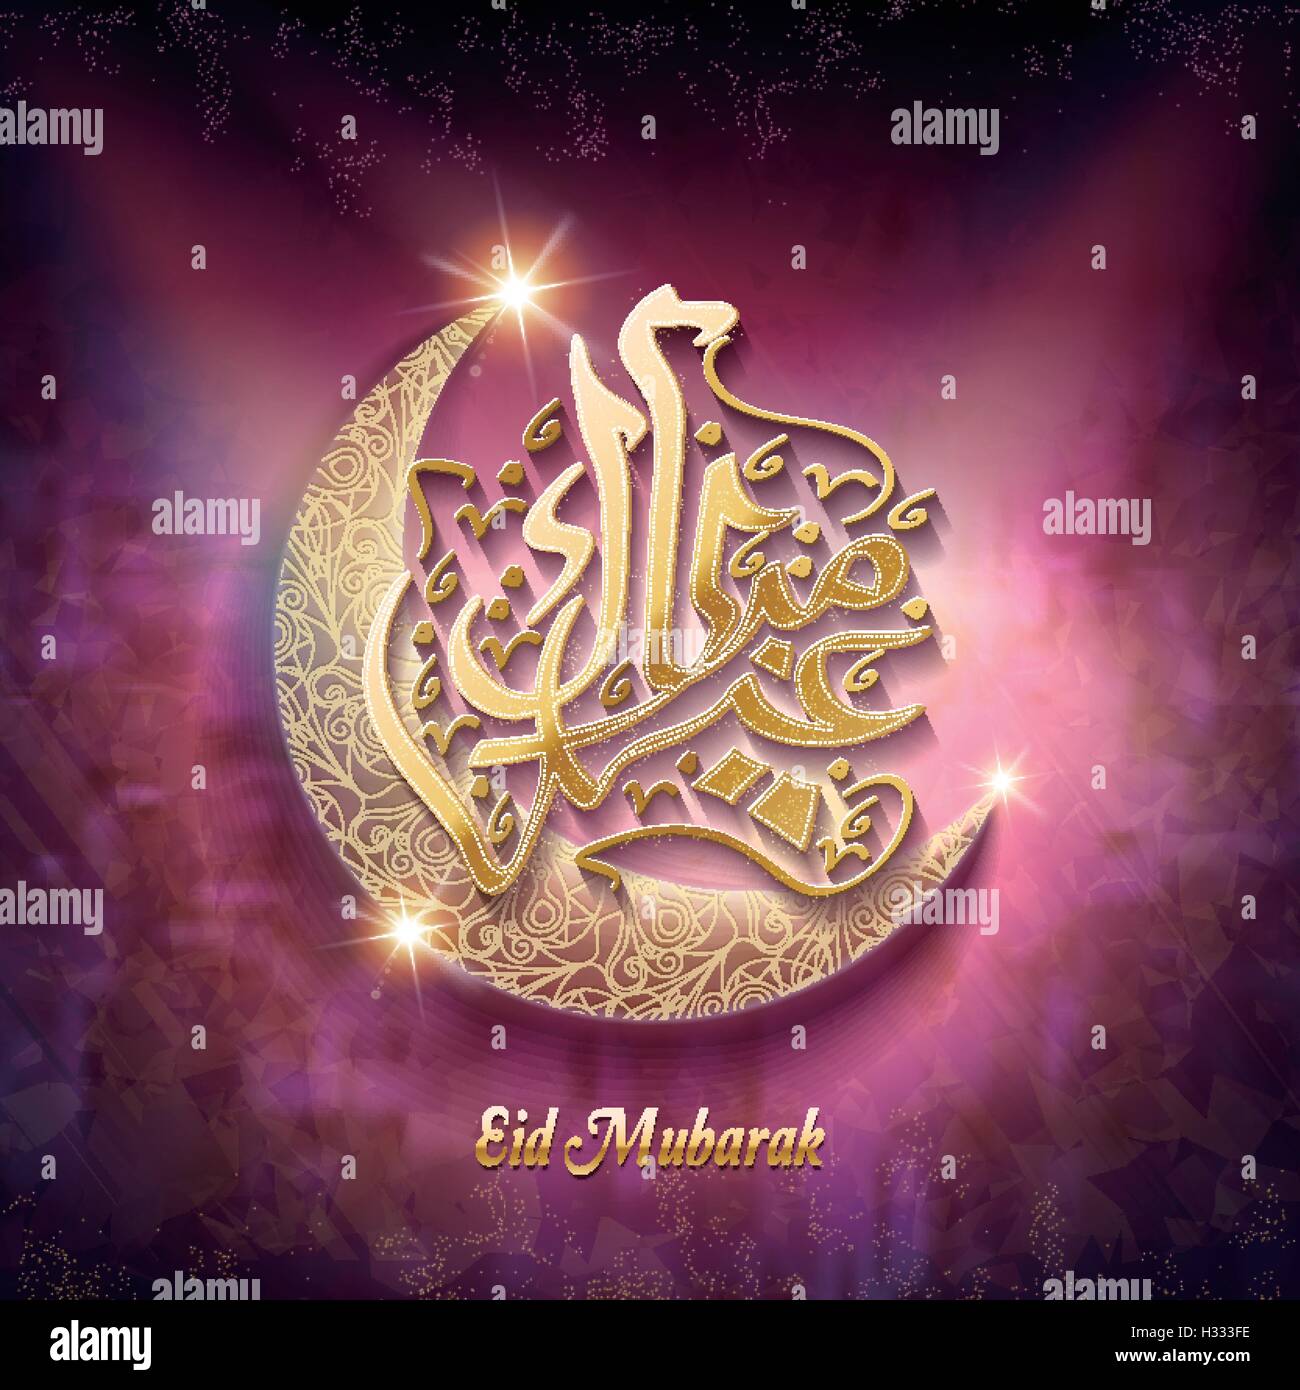 Eid Mubarak Calligraphy Design Delicate Holiday Greeting For Ramadan Stock Vector Image Art Alamy